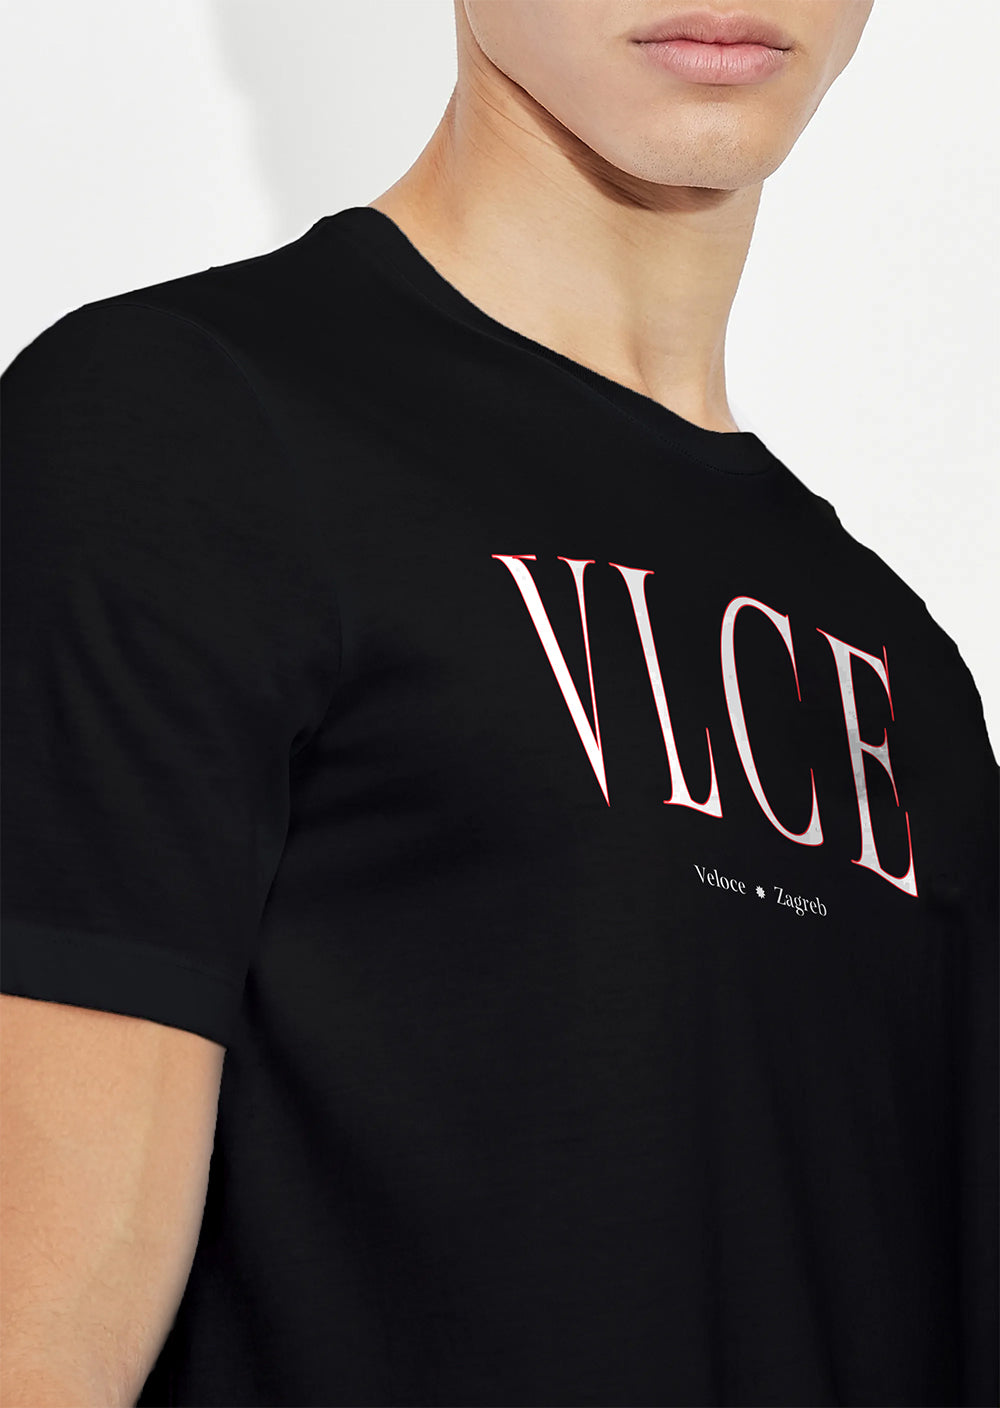 Veloce VLCE T-Shirt - Black